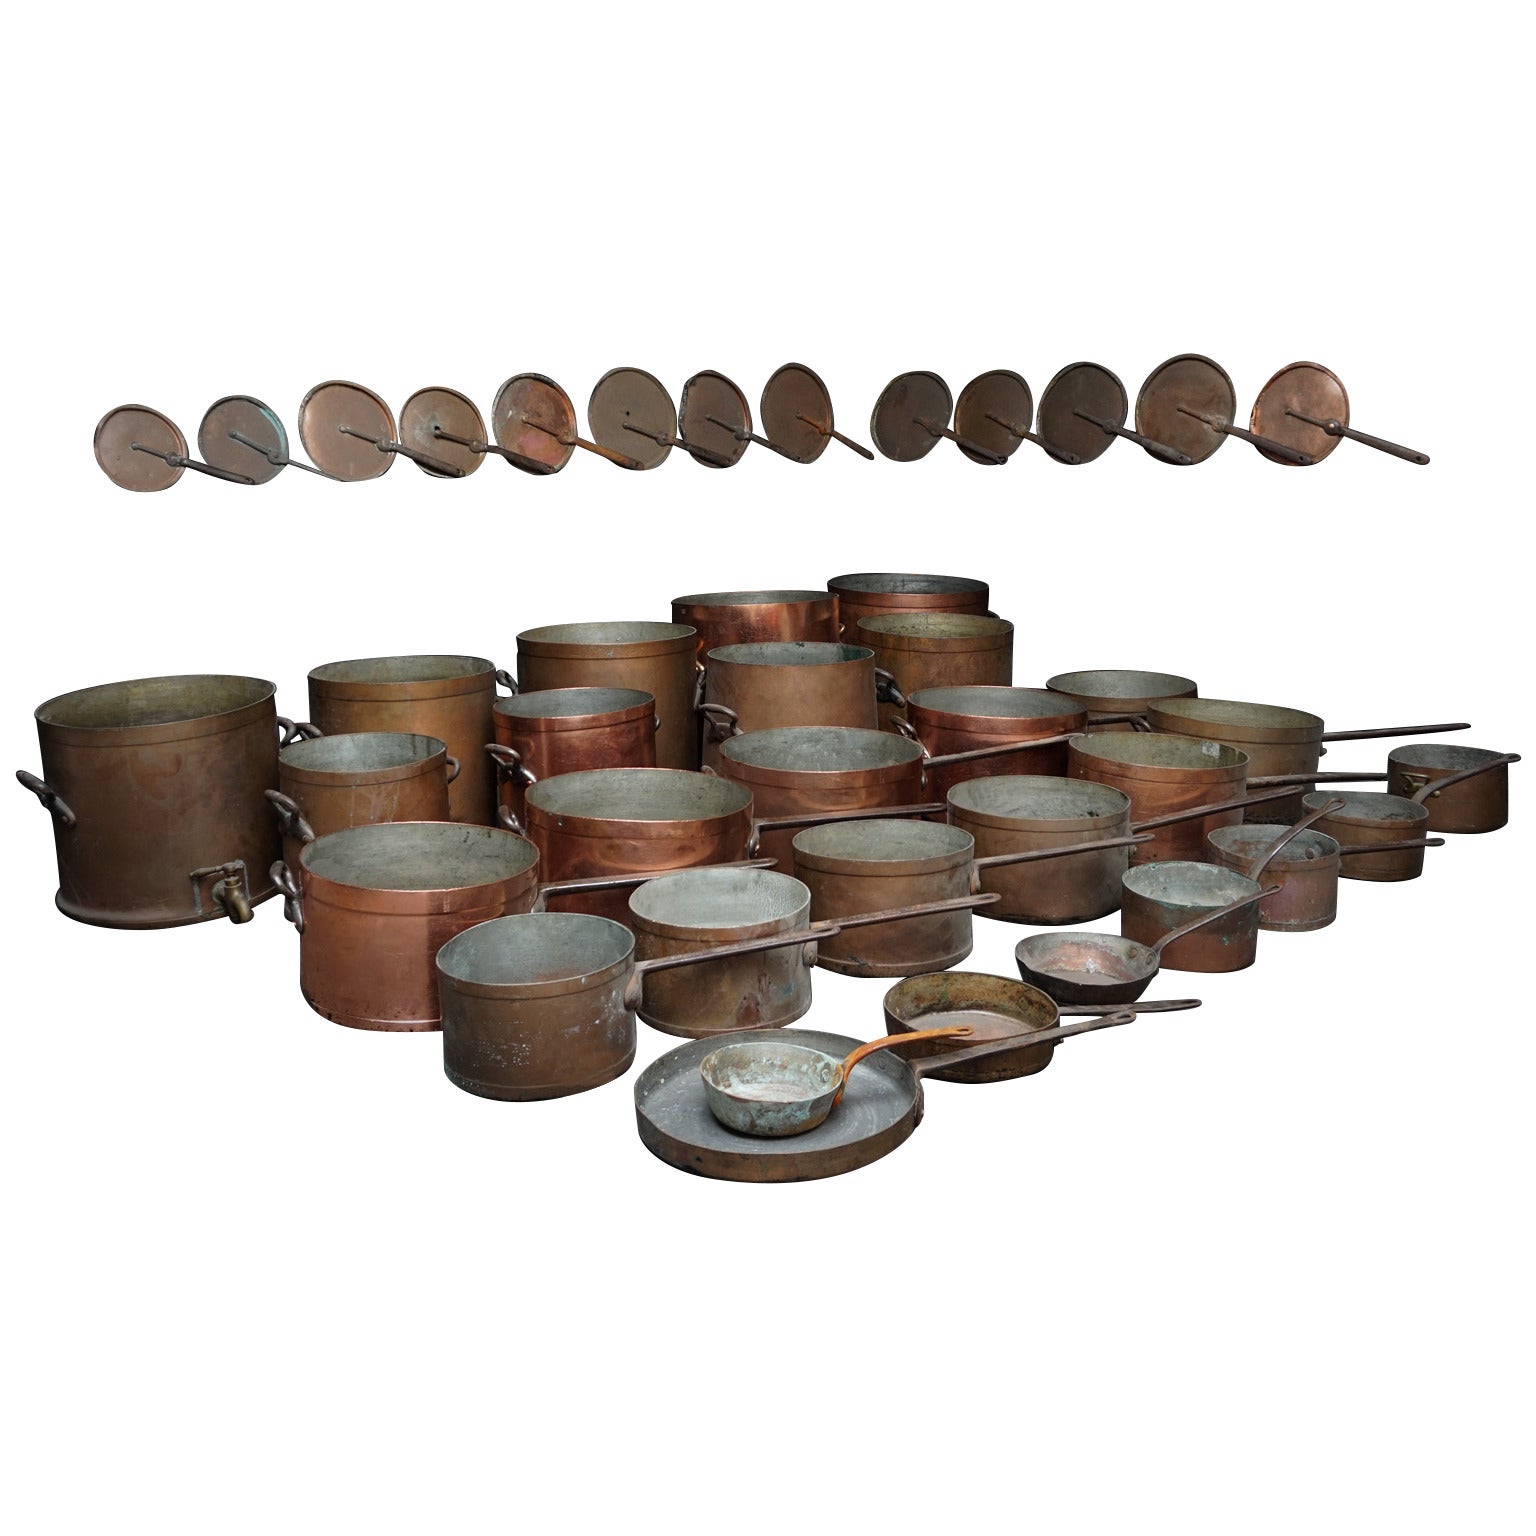 Huge 74 Pieces Set of Huge Antique Culinary Copper Pans, Etc.